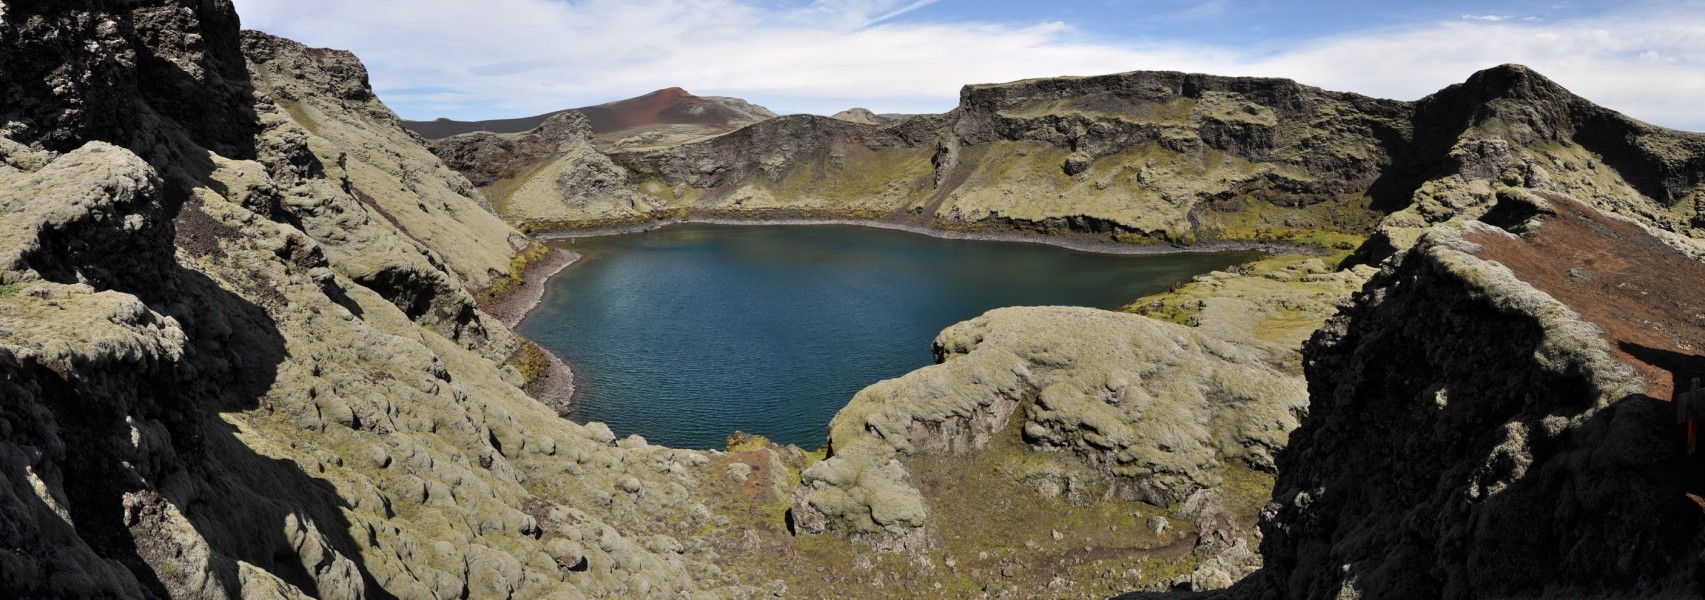 Crater inundado en Lakagigar (Islandia) - panoramio